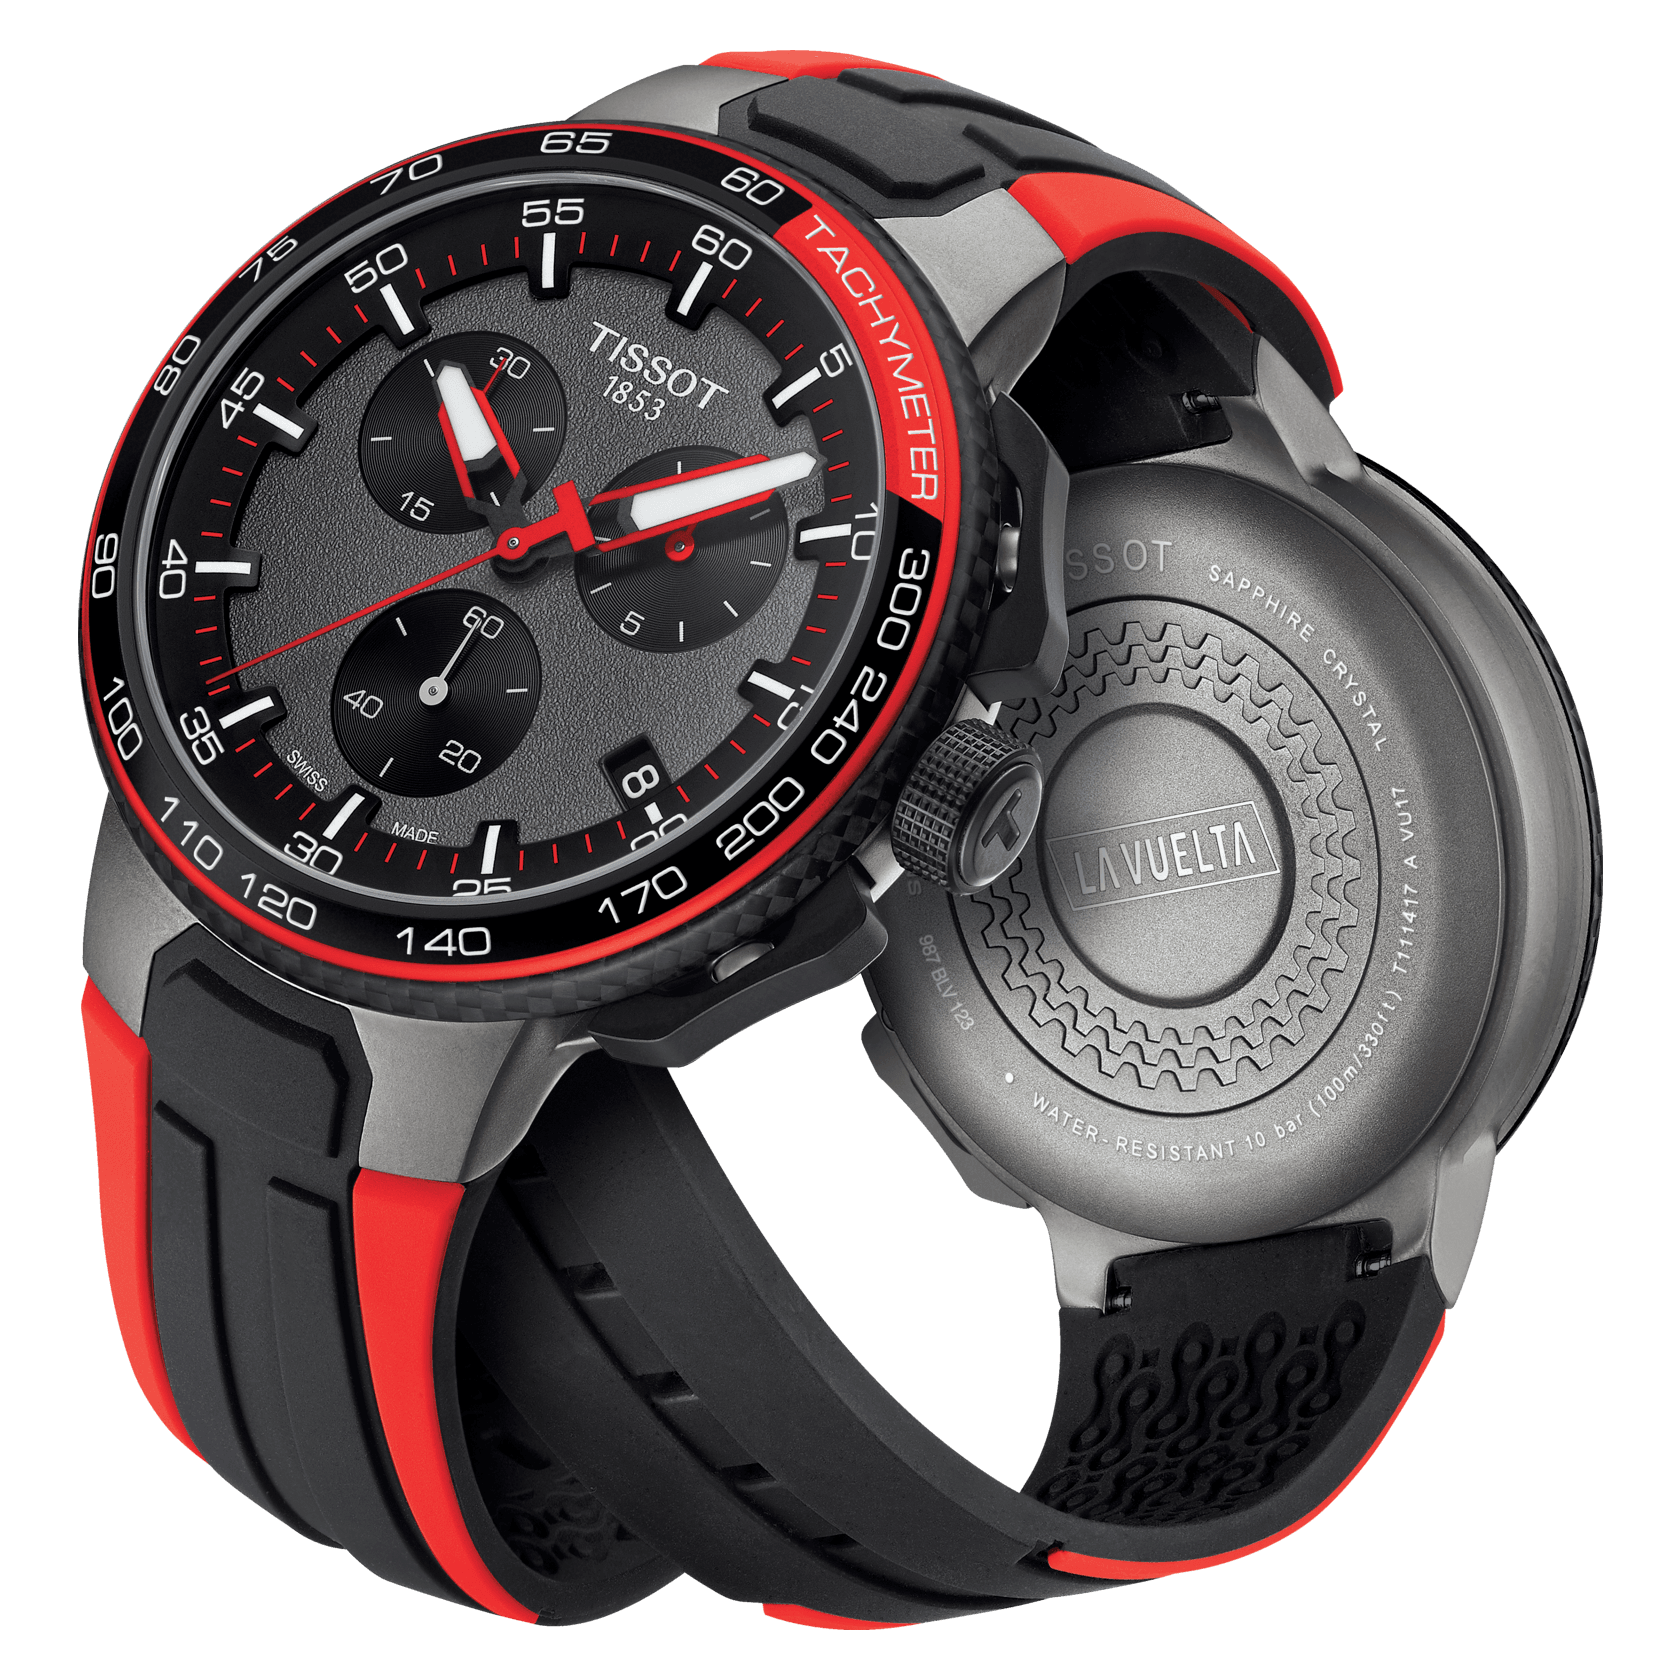 Luxury Replica Watch